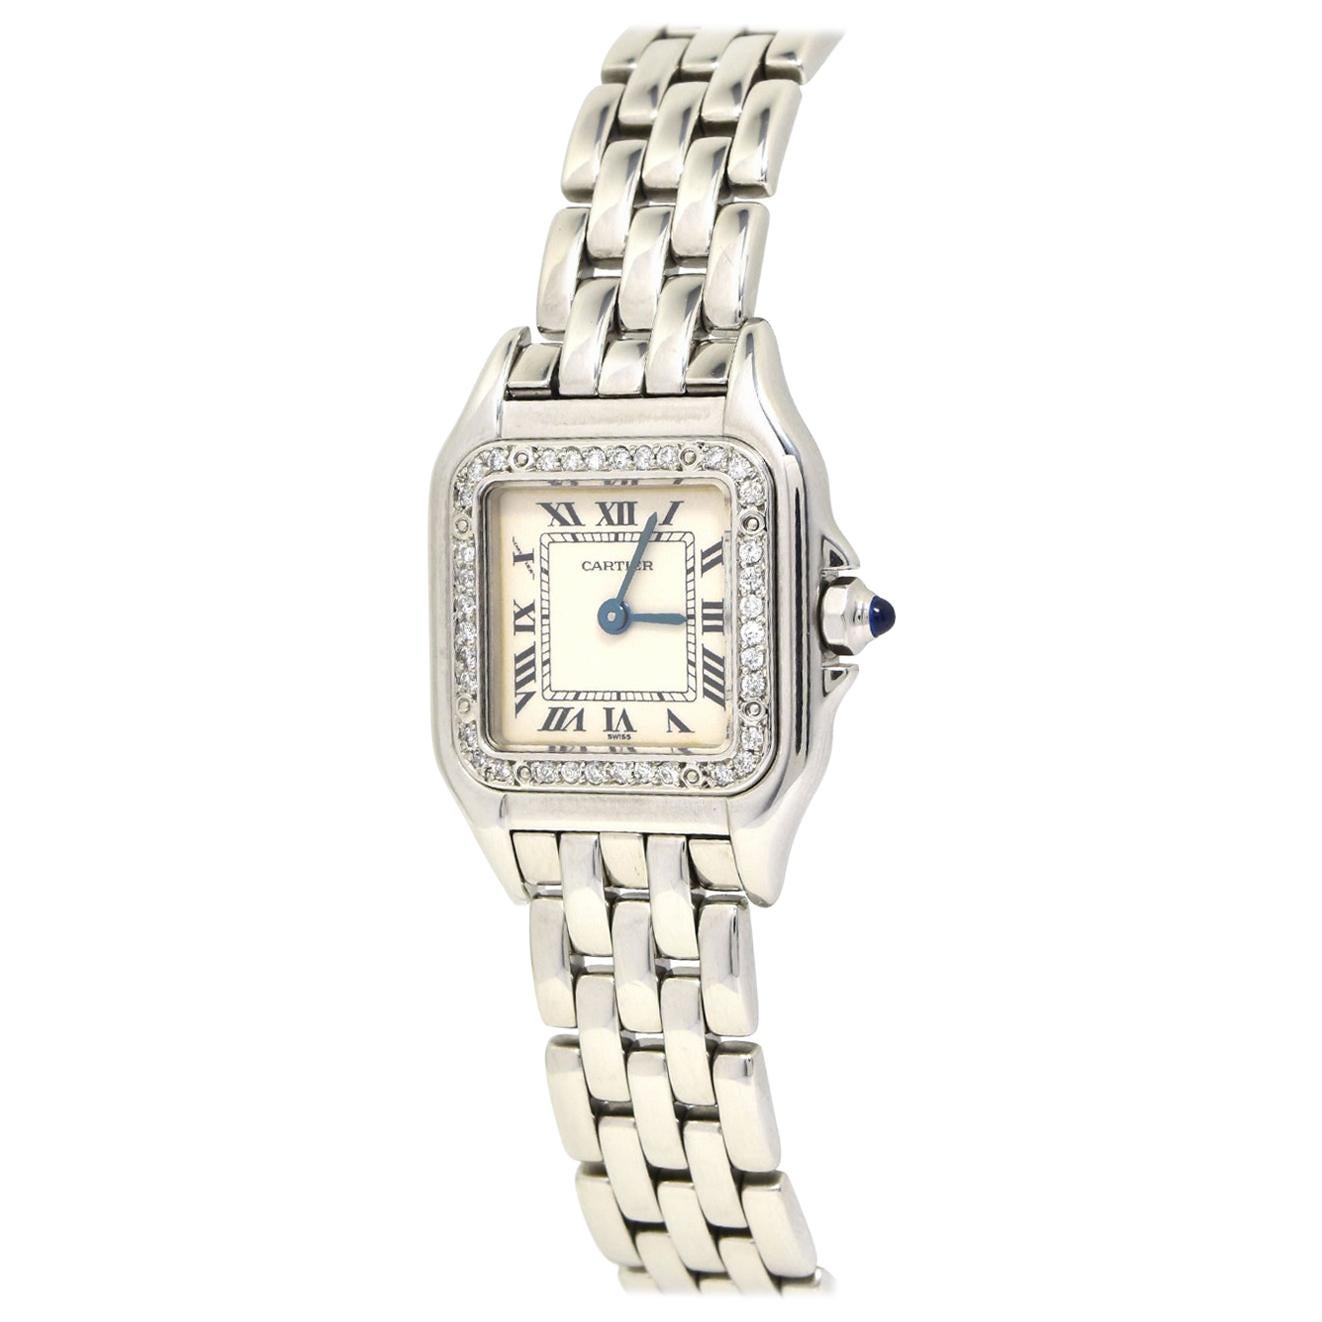 Cartier Panthere Ref. 1320 Custom Diamond Stainless Steel Watch